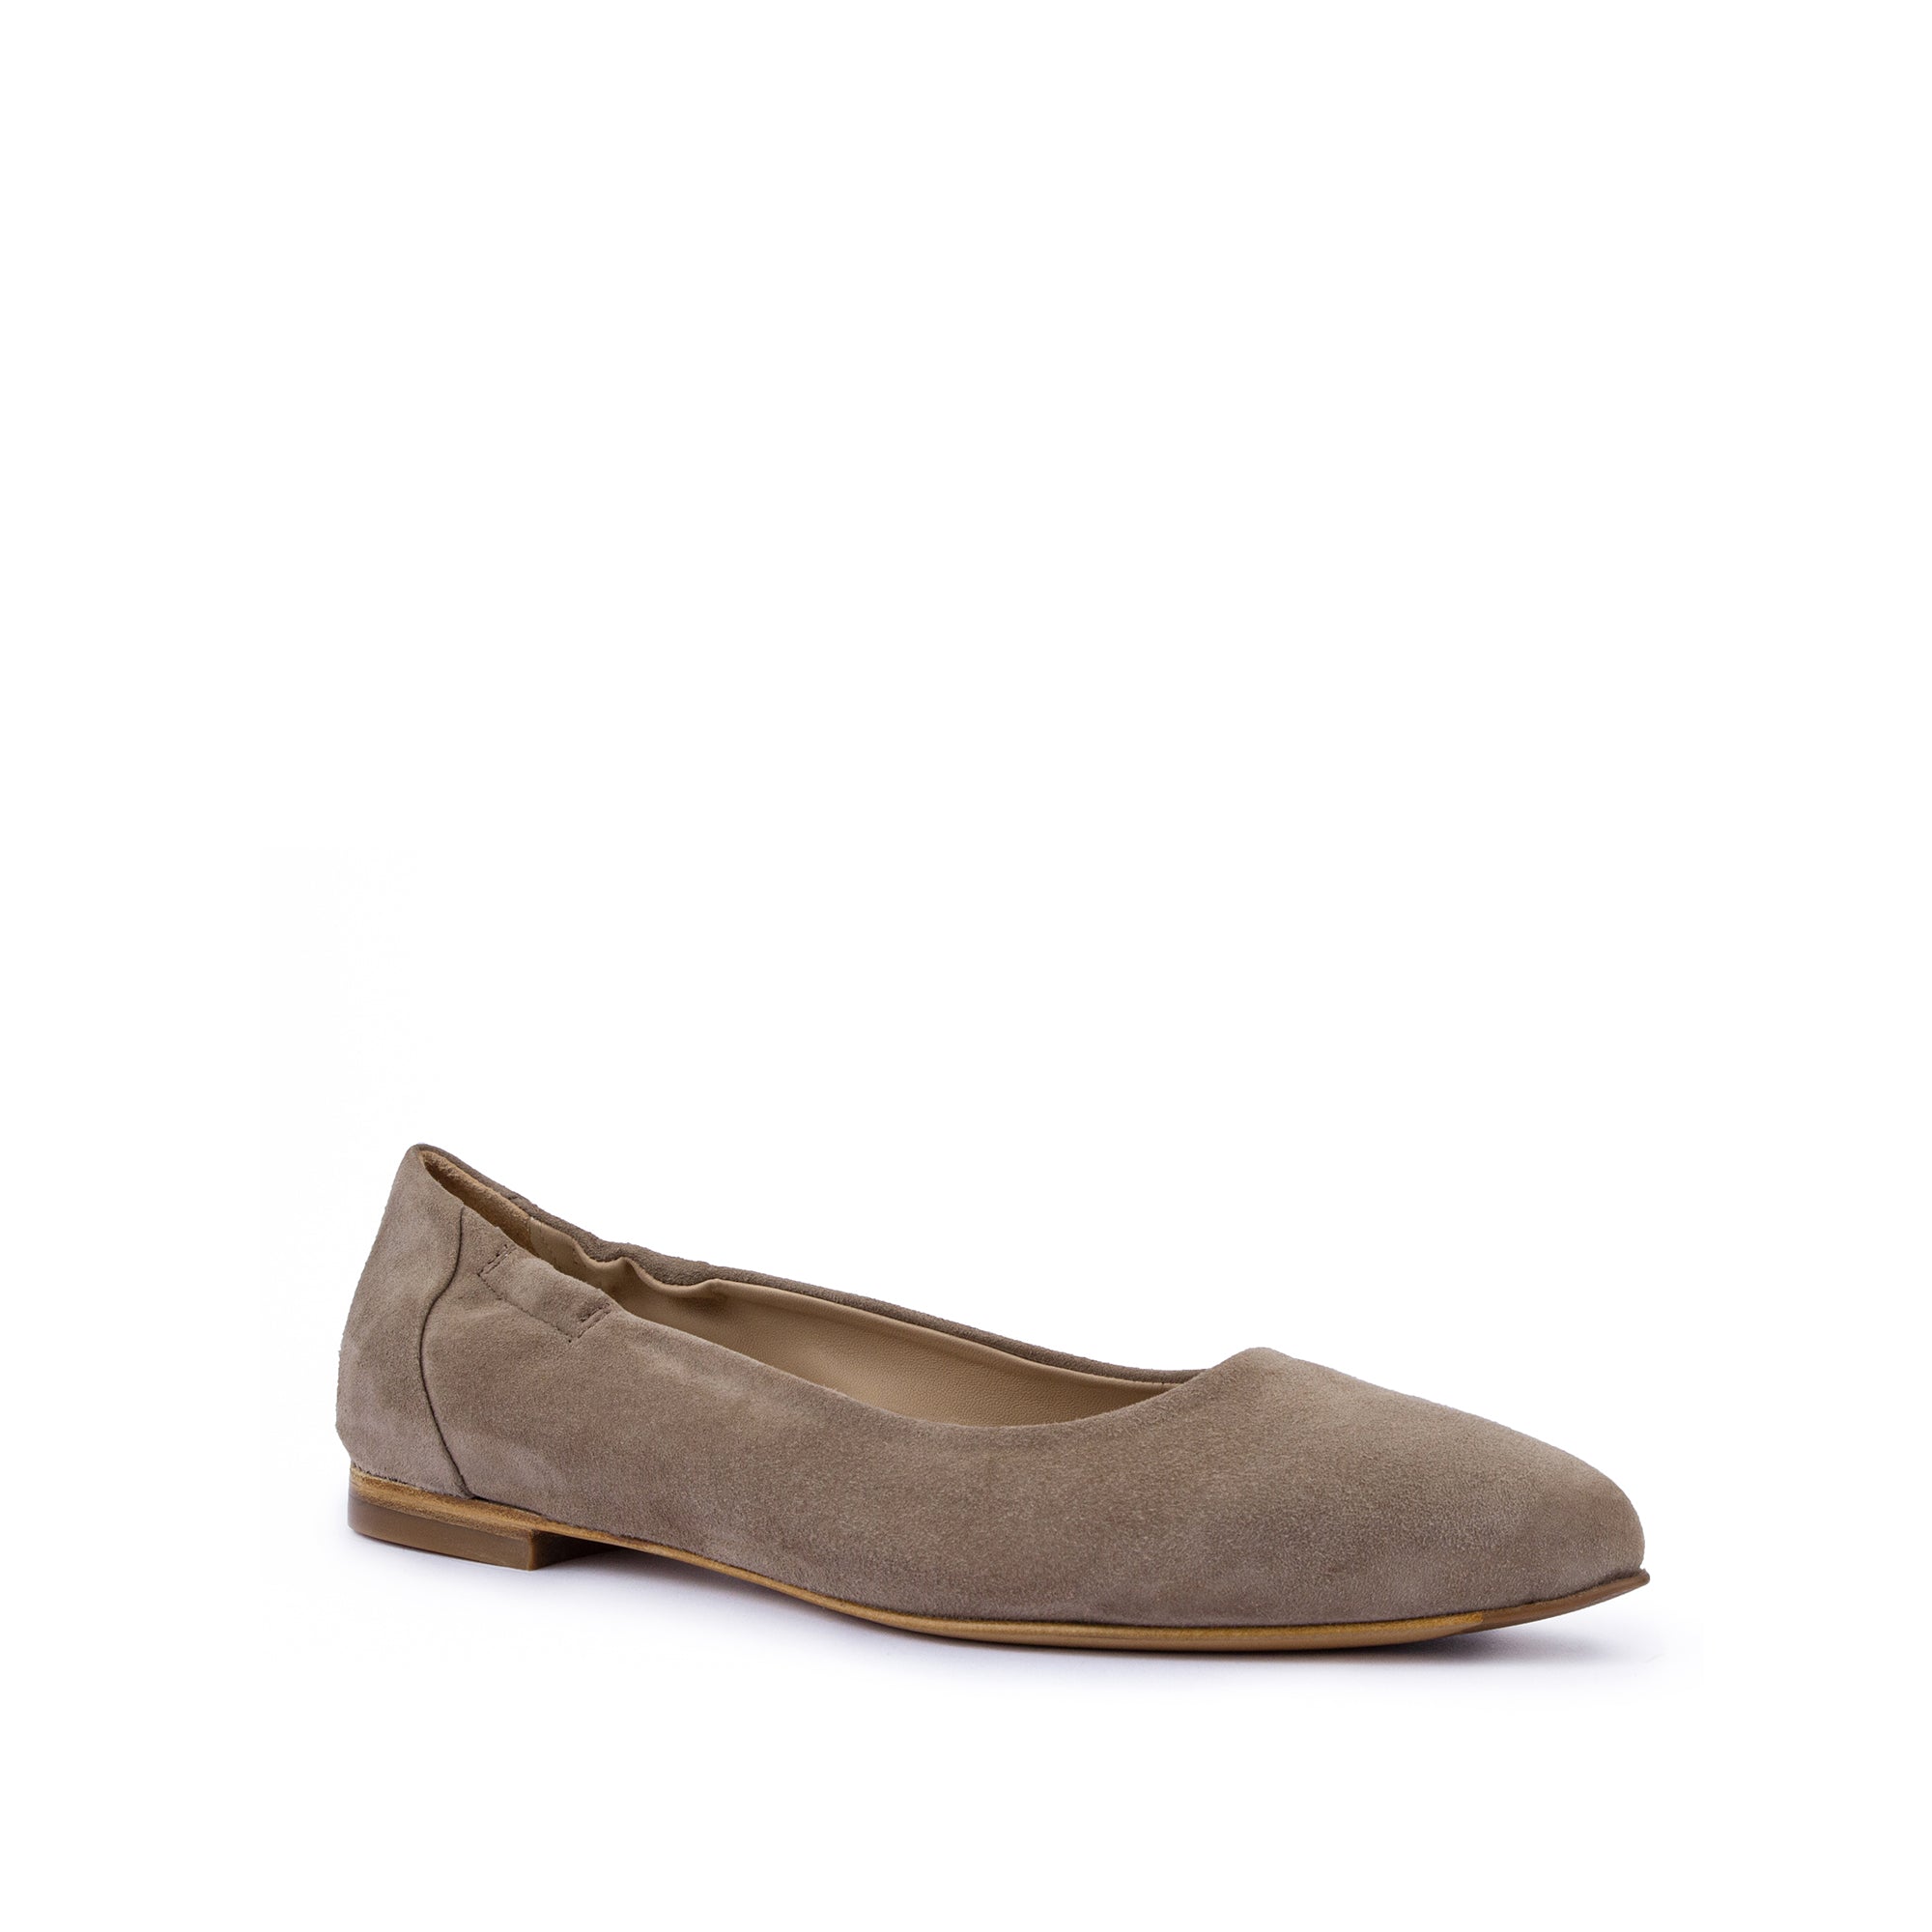 Mara Flats | Women’s Ballet Flats | Italian Suede Shoes - Italeau Nuova